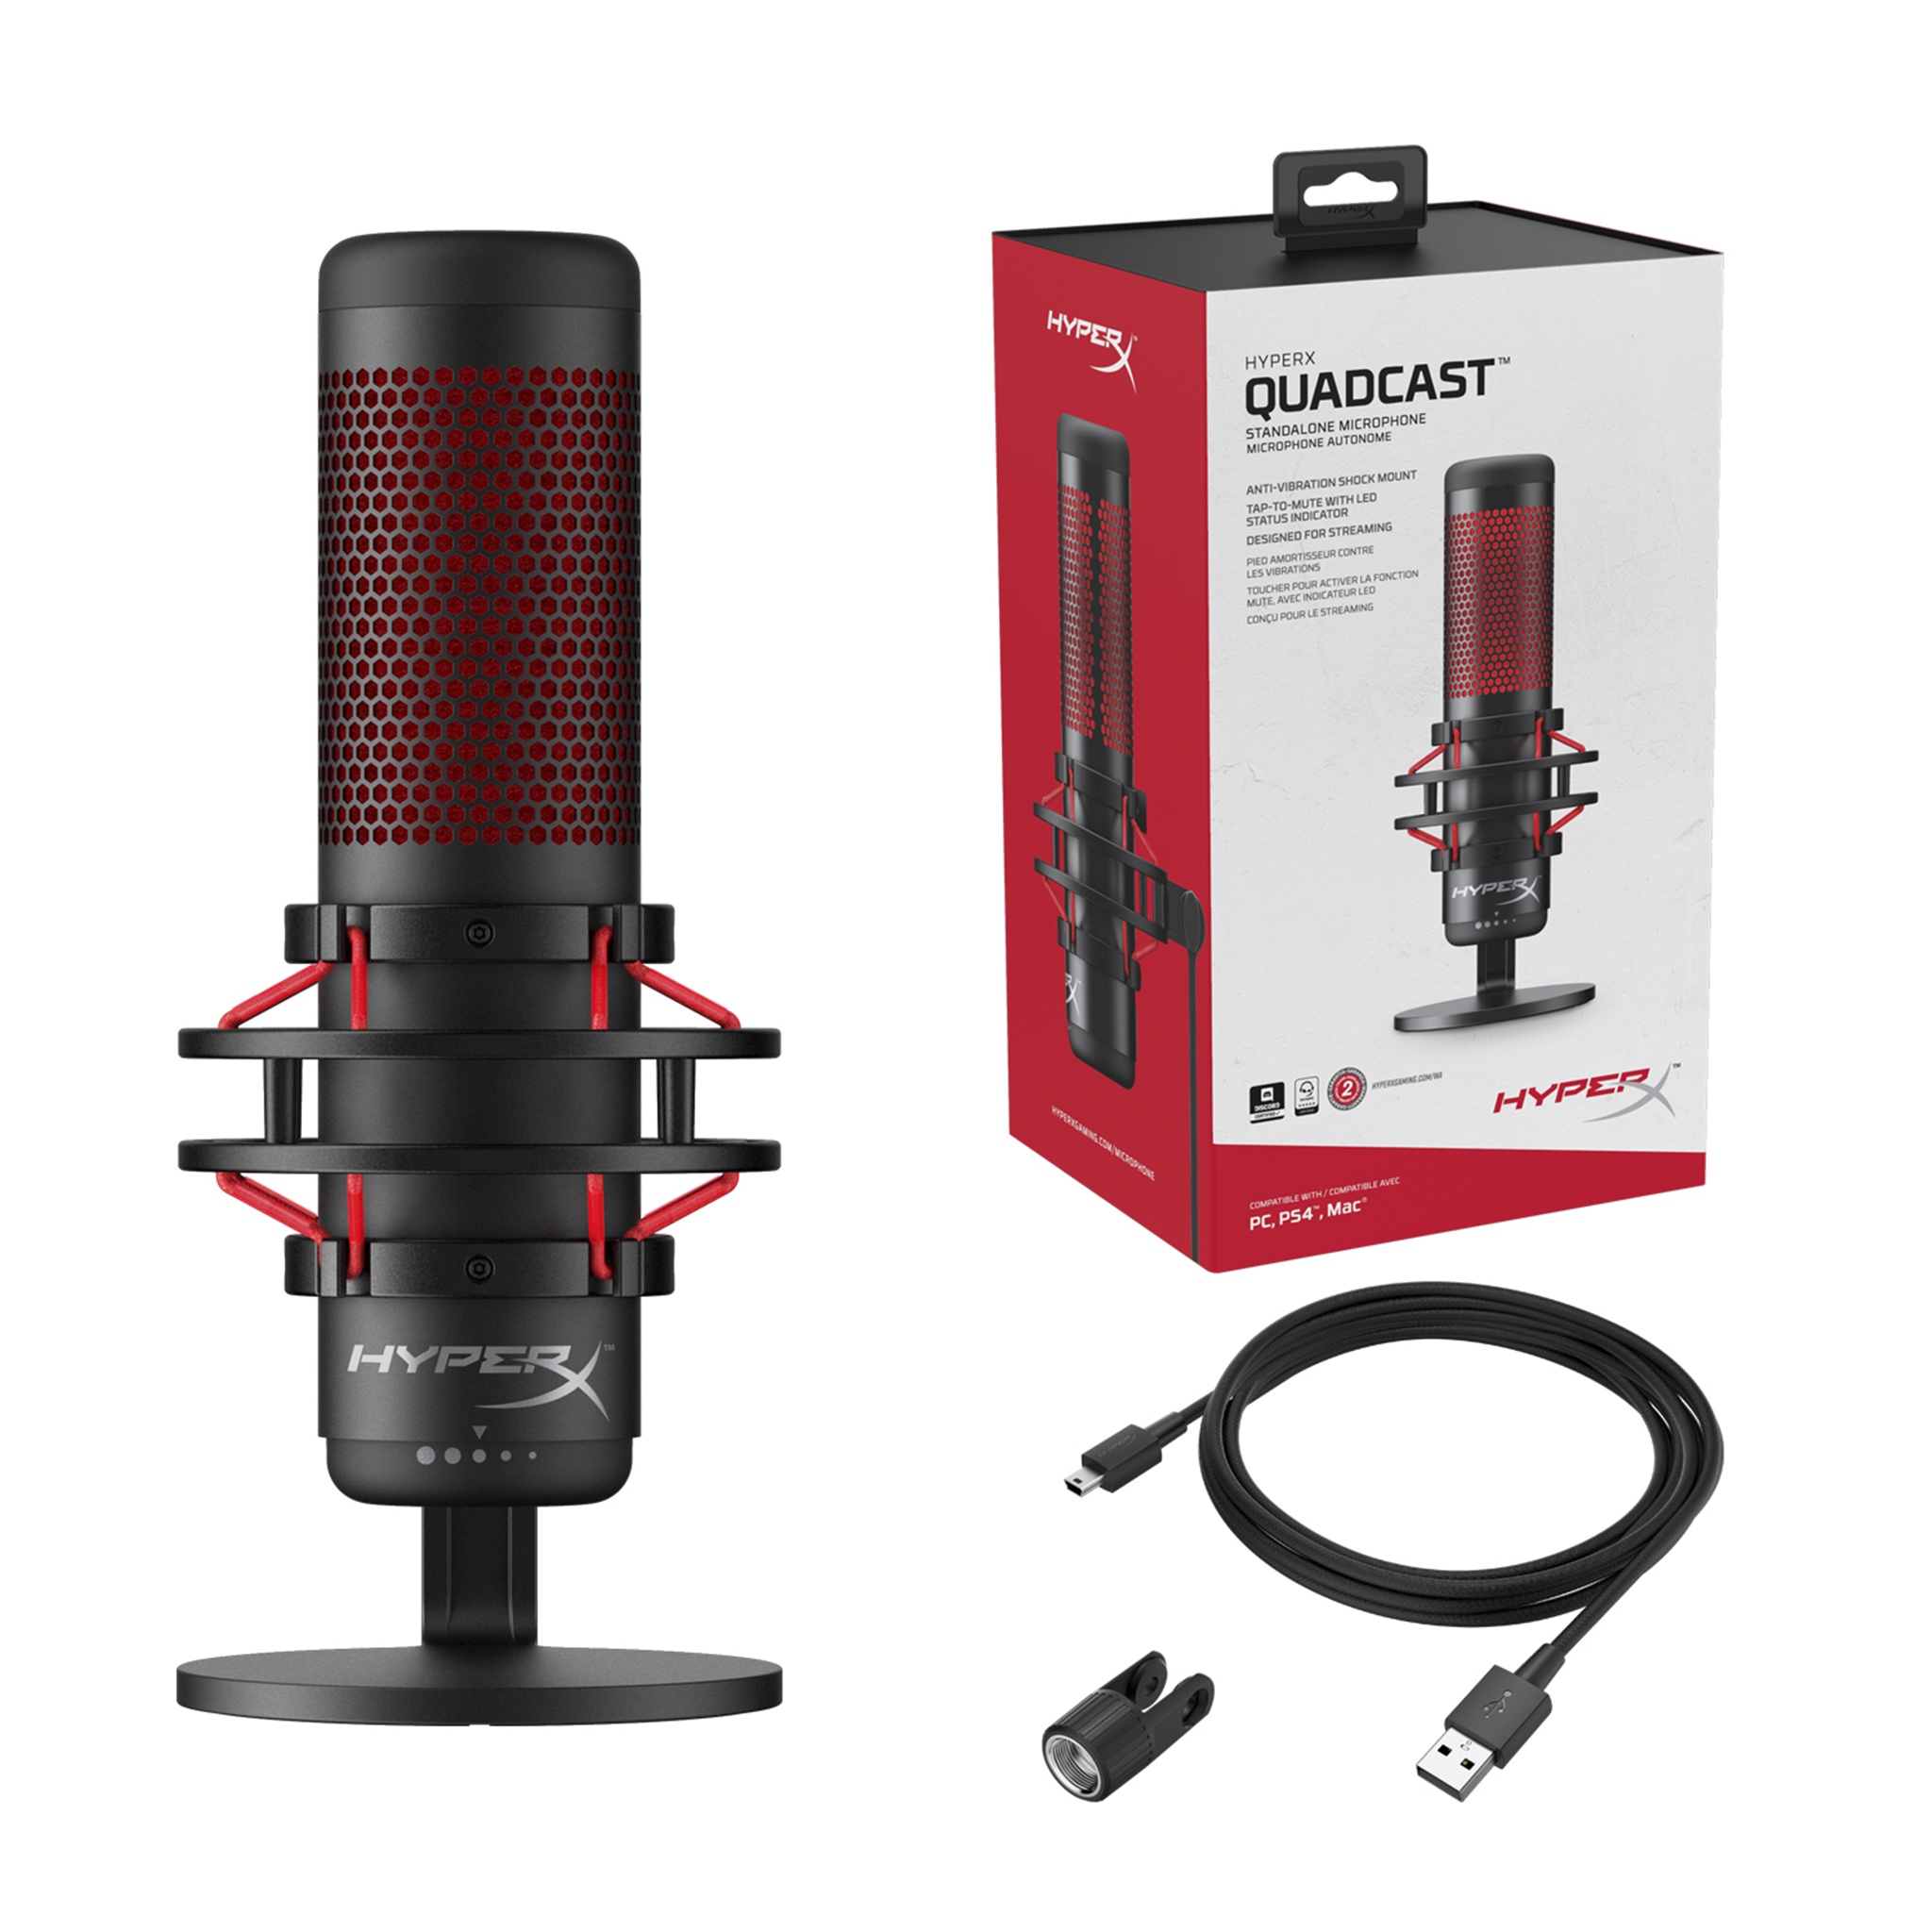 HyperX Quadcast Desktop Microphone, Black/Red   A Power Computer Ltd